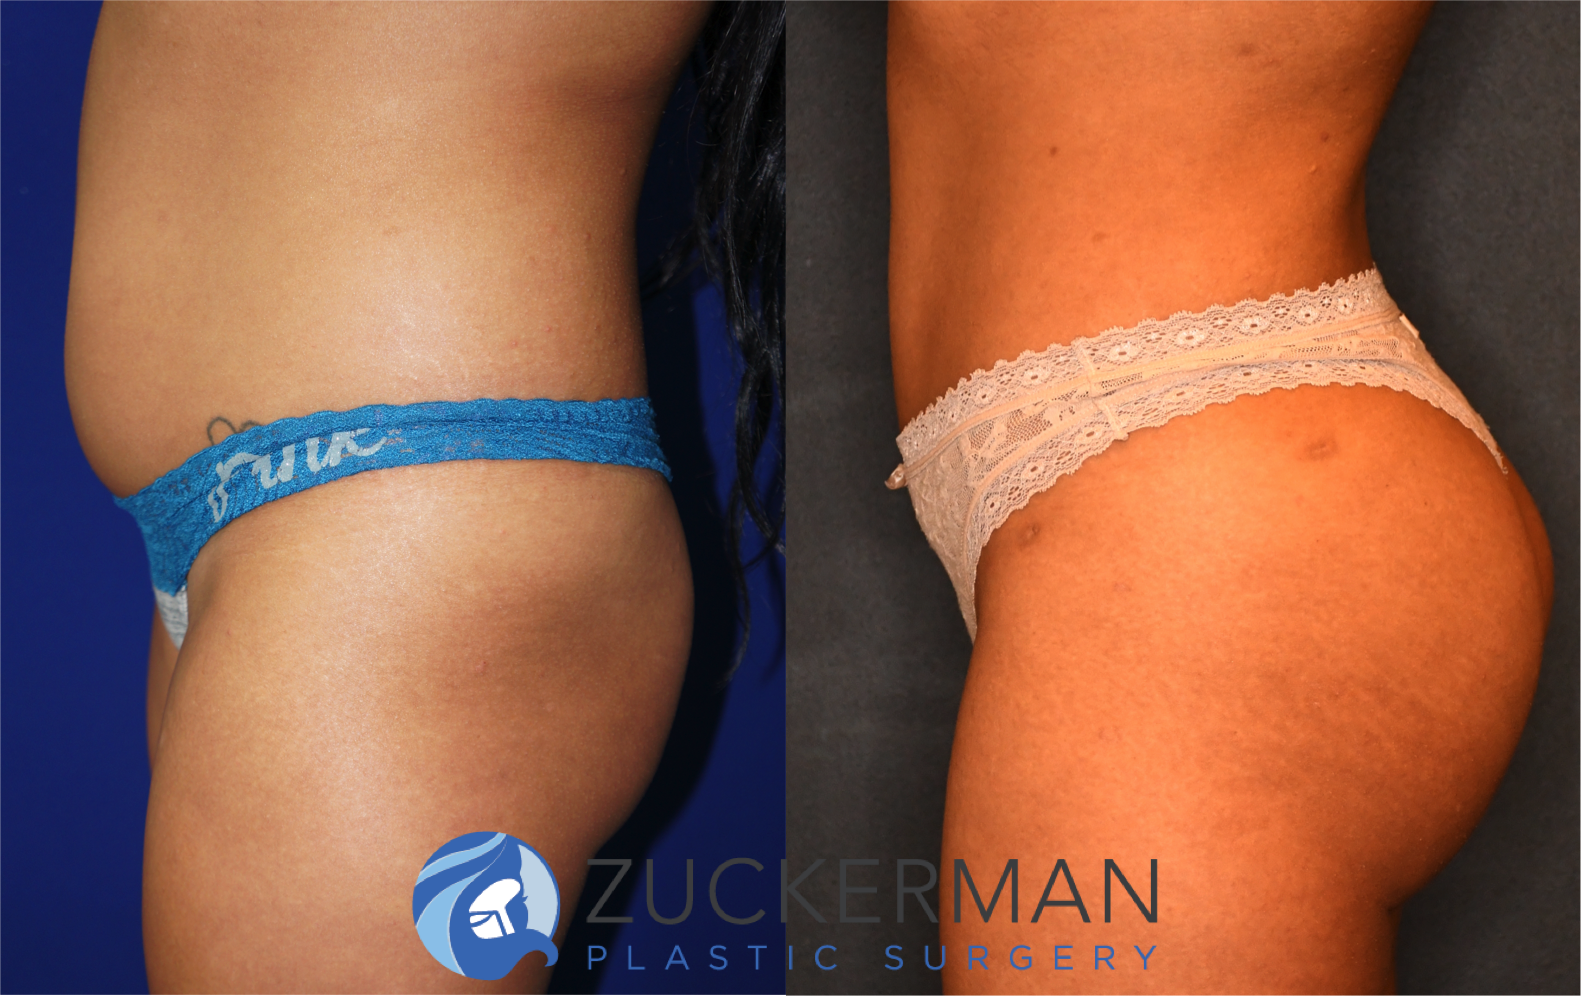 brazilian butt lift, bbl, buttock augmentation, 5, before and after, joshua zuckerman, left profile view